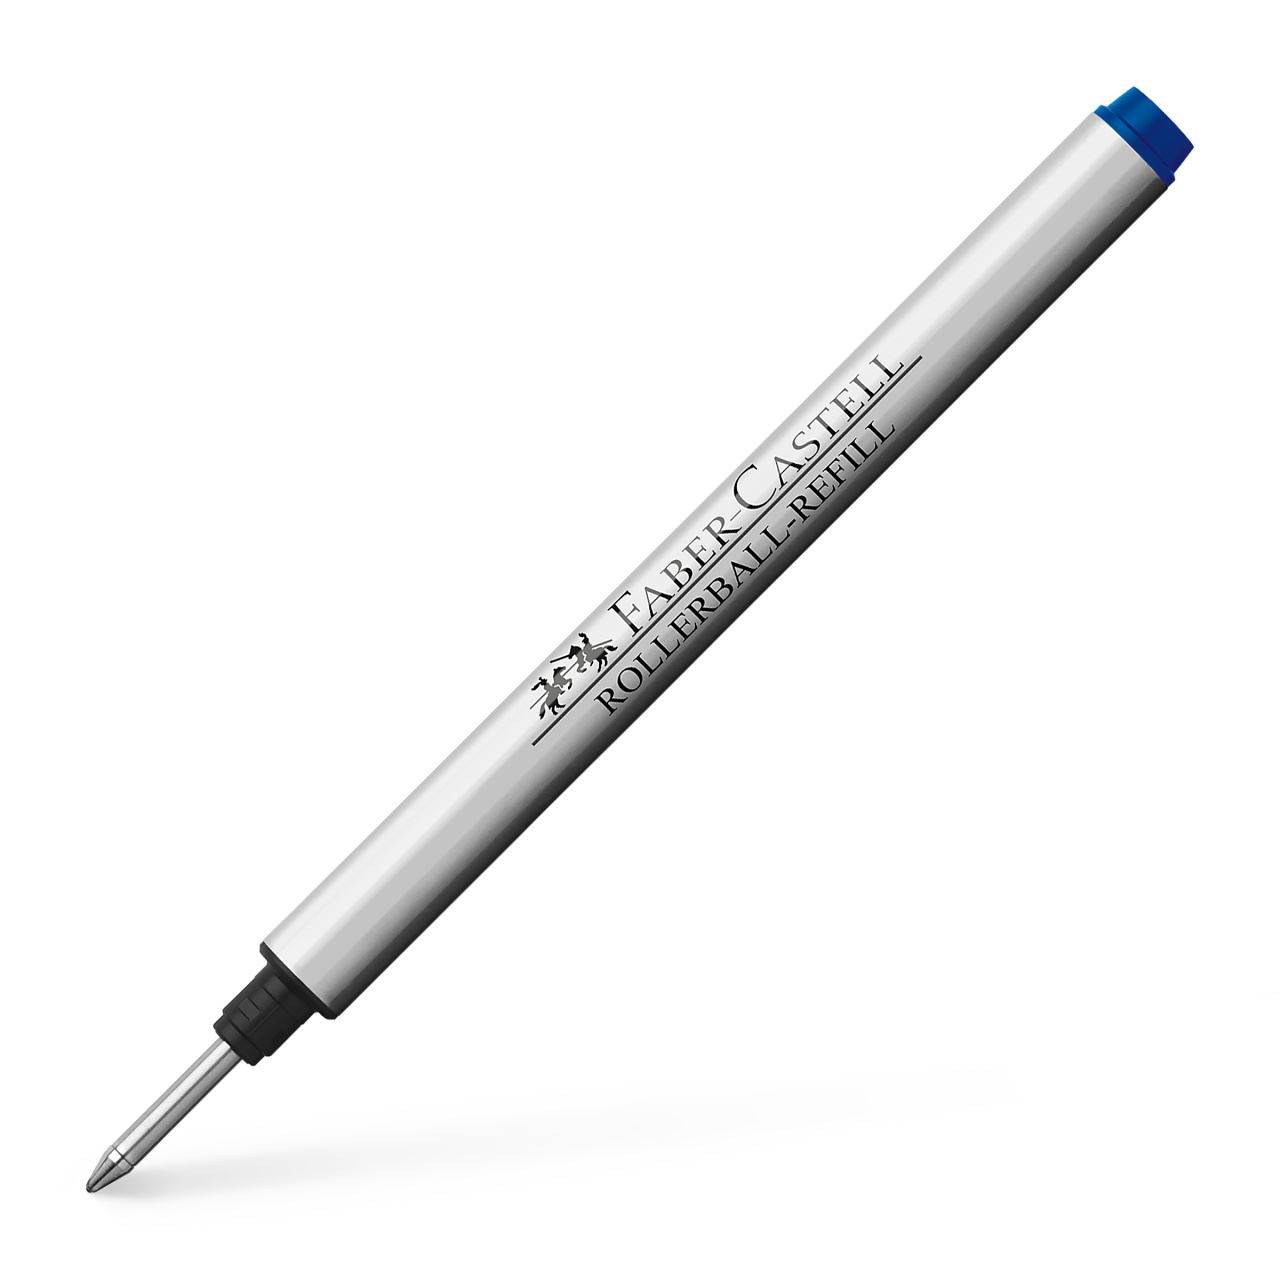 Graf-von-Faber-Castell - Roller kalem mavi Magnum kartuş